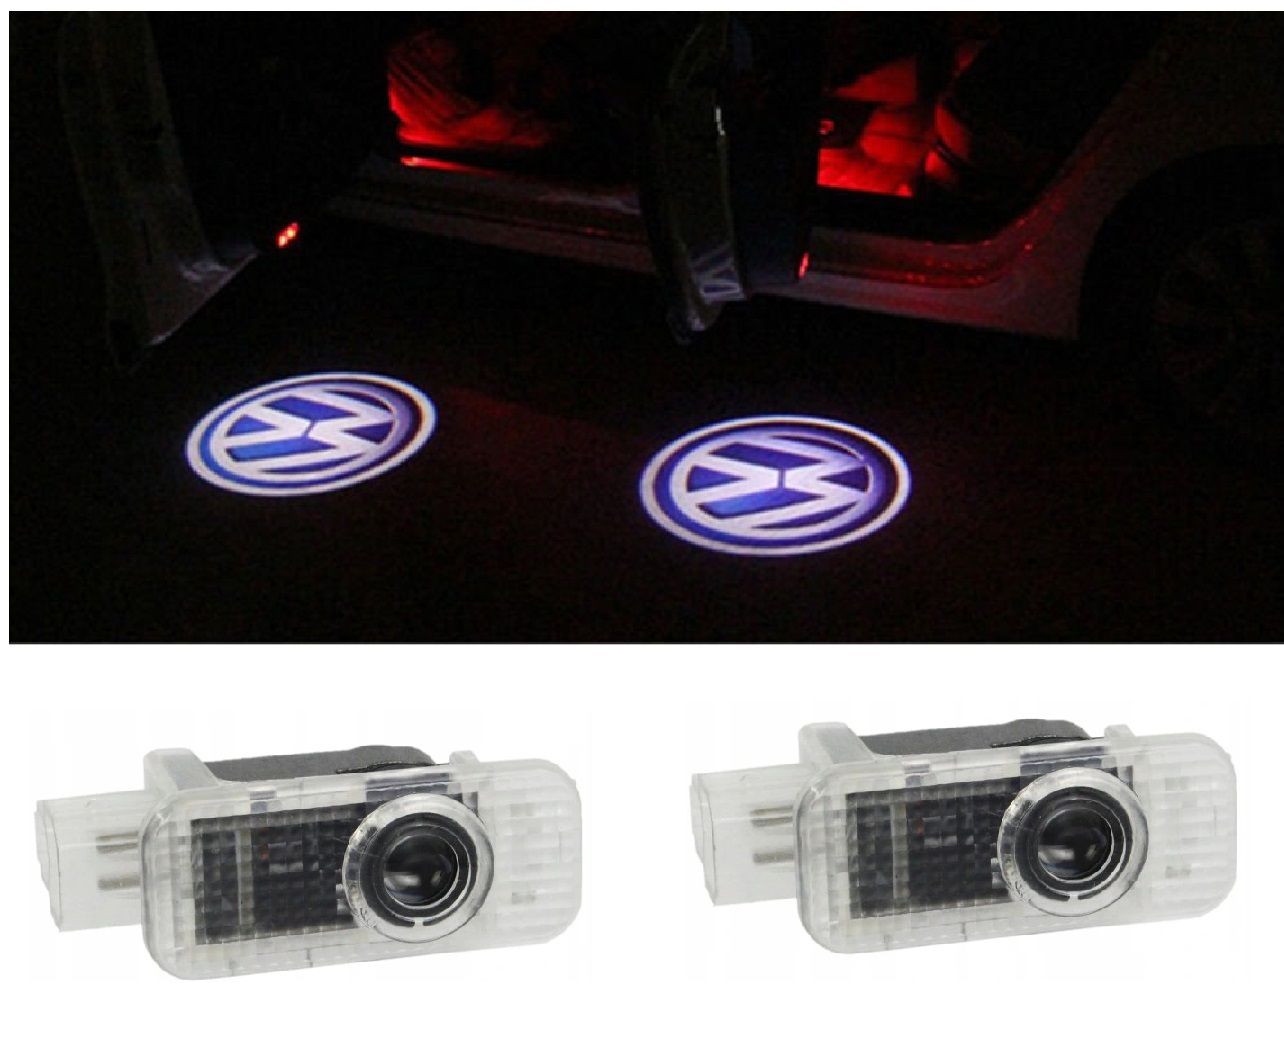 Sylswx 2 Stück Autotür Logo Projektor für Golf 5 6 7 Passat B6 B7 B8 CC MK5  MK6 Tiguan Touareg, Unterbodenbeleuchtung Auto, Willkommen LED Licht